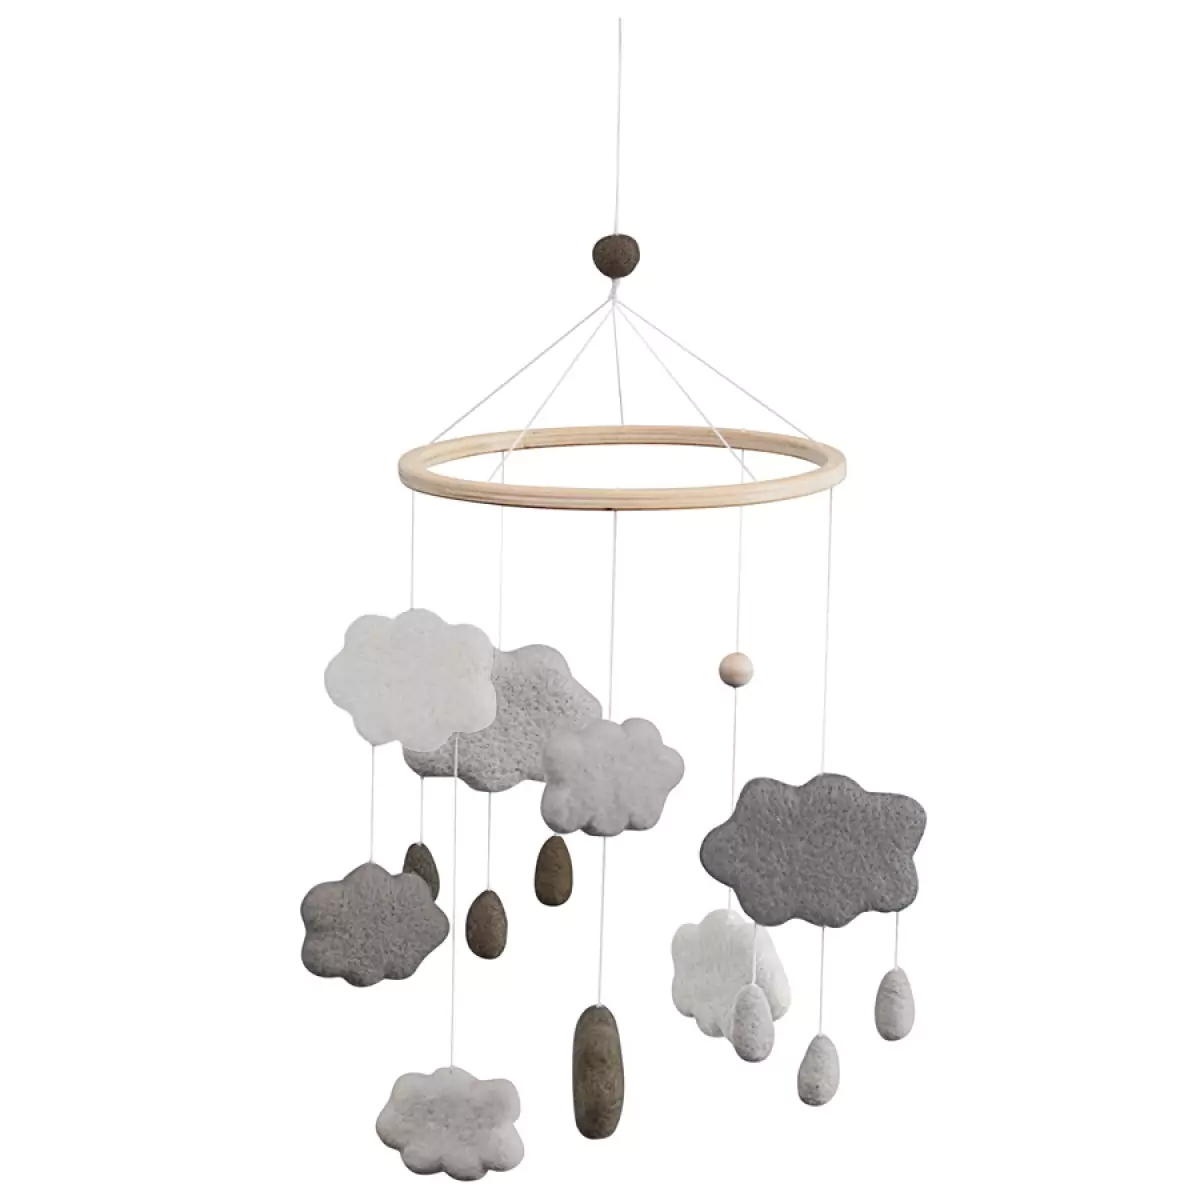 sebra Filz-Mobile Wolken warmes grau beim Holzspielzeug Profi